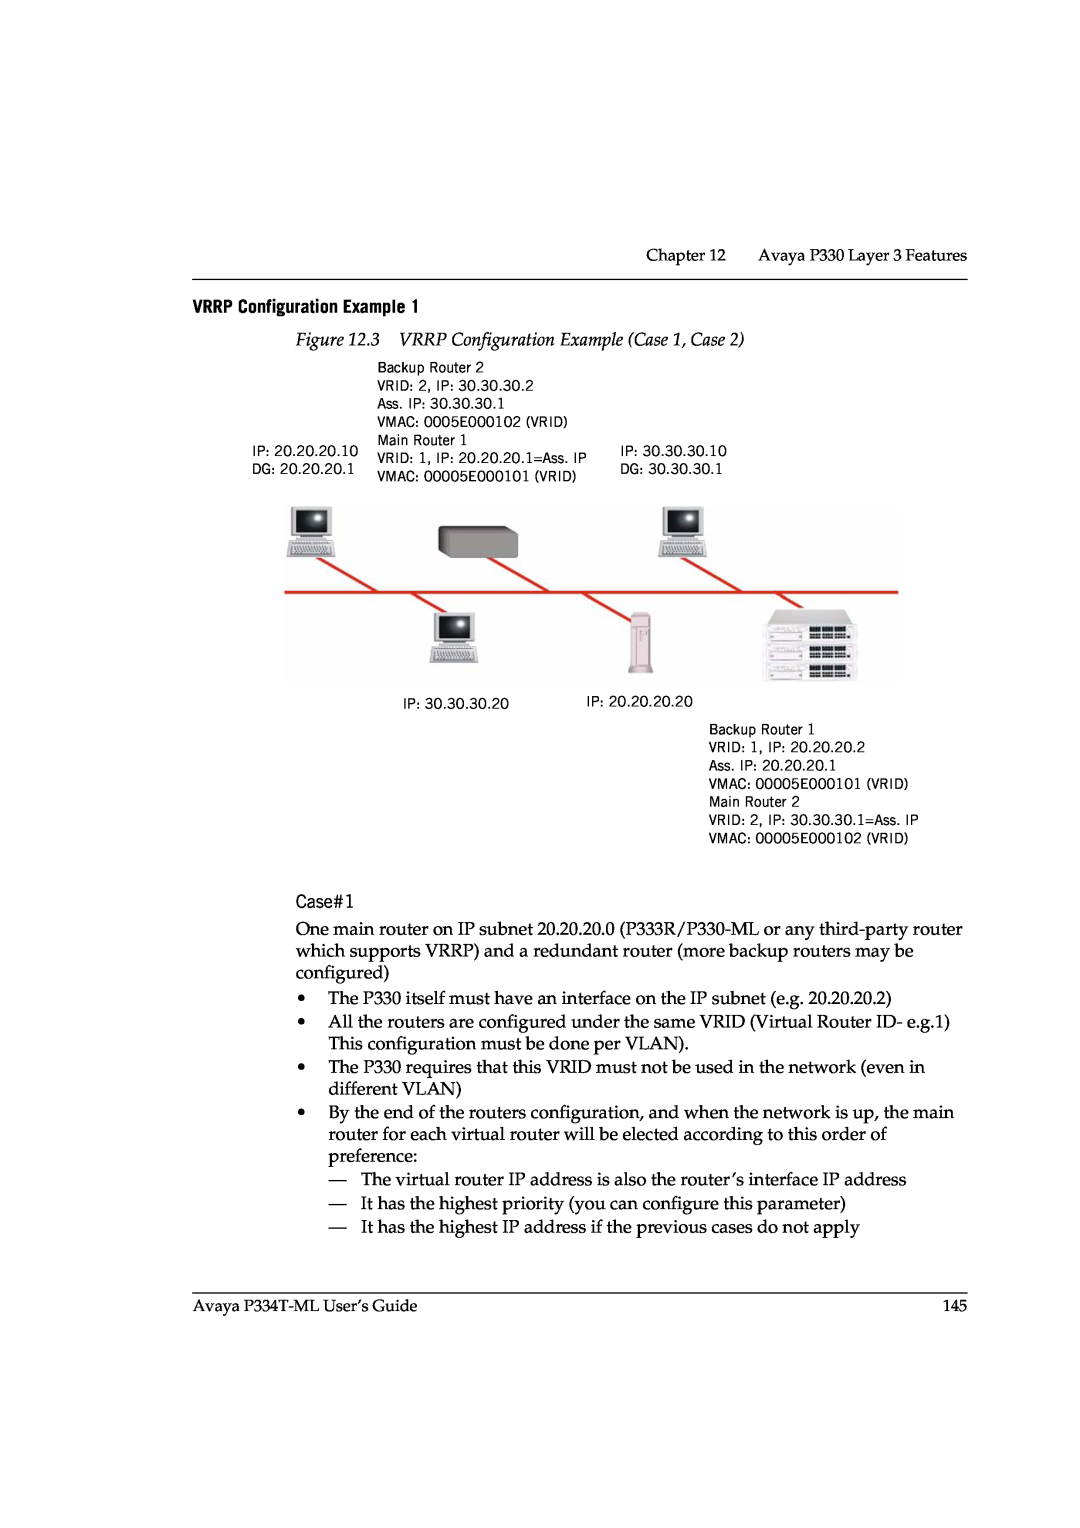 Avaya P3343T-ML manual VRRP Configuration Example 